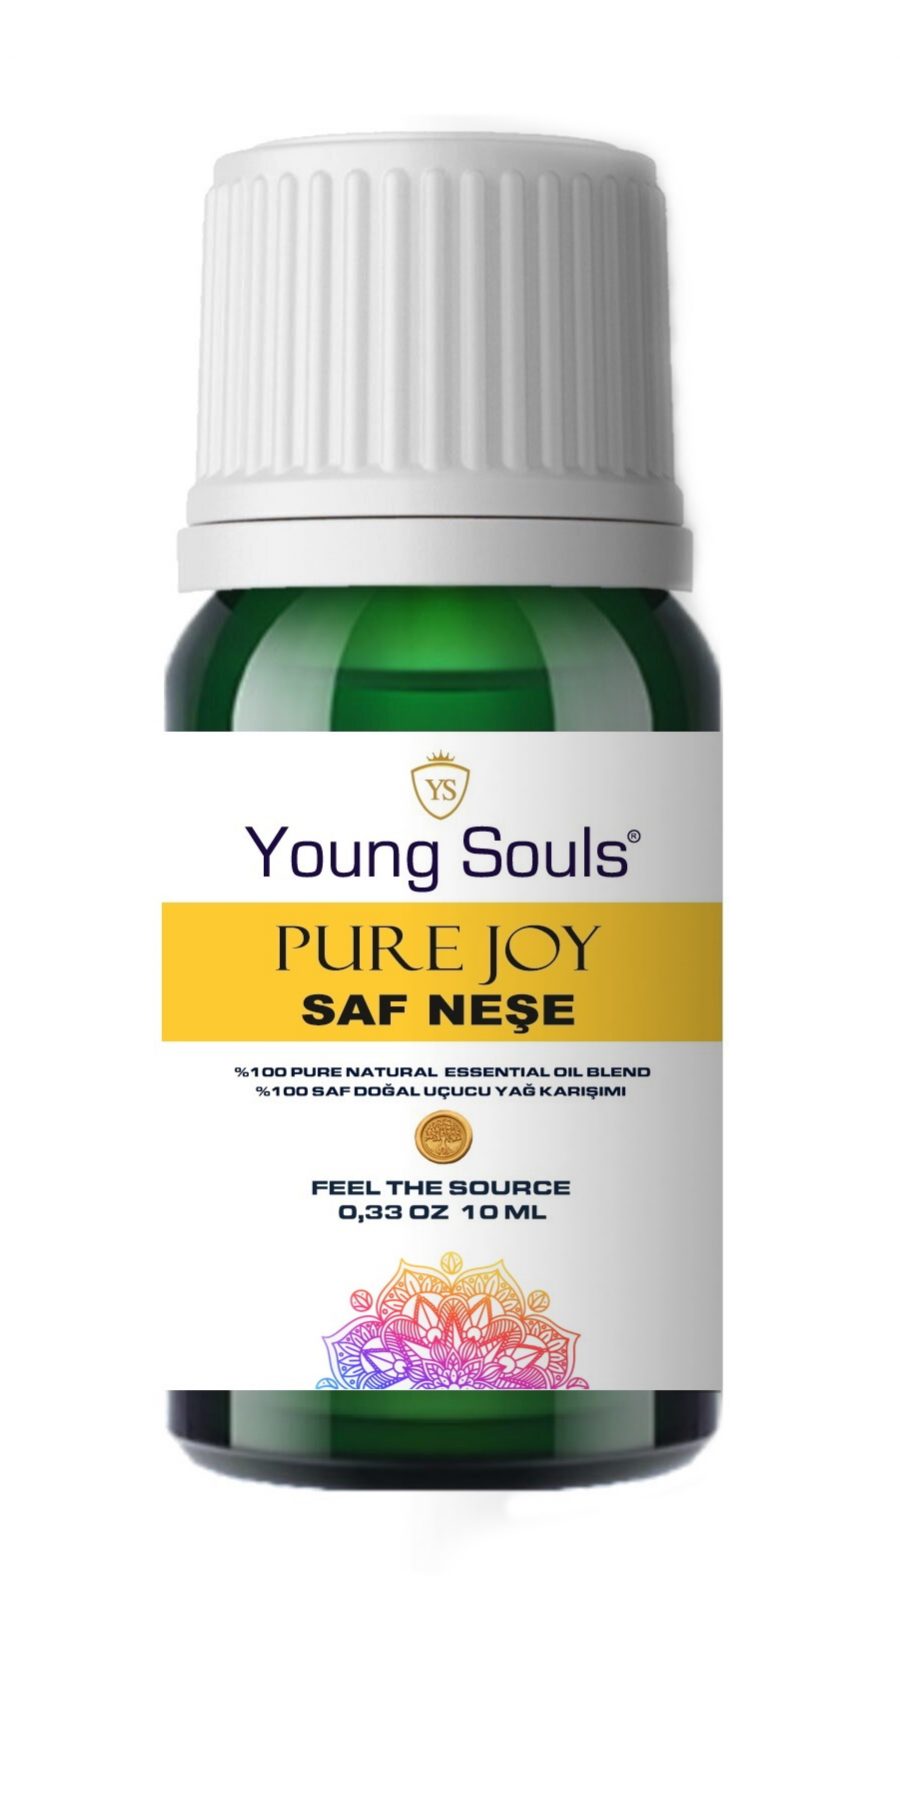 Young Souls Aromaterapi Pure Joy (Saf Neşe) Uçucu Yağ Karışımı %100 Pure 10 ml